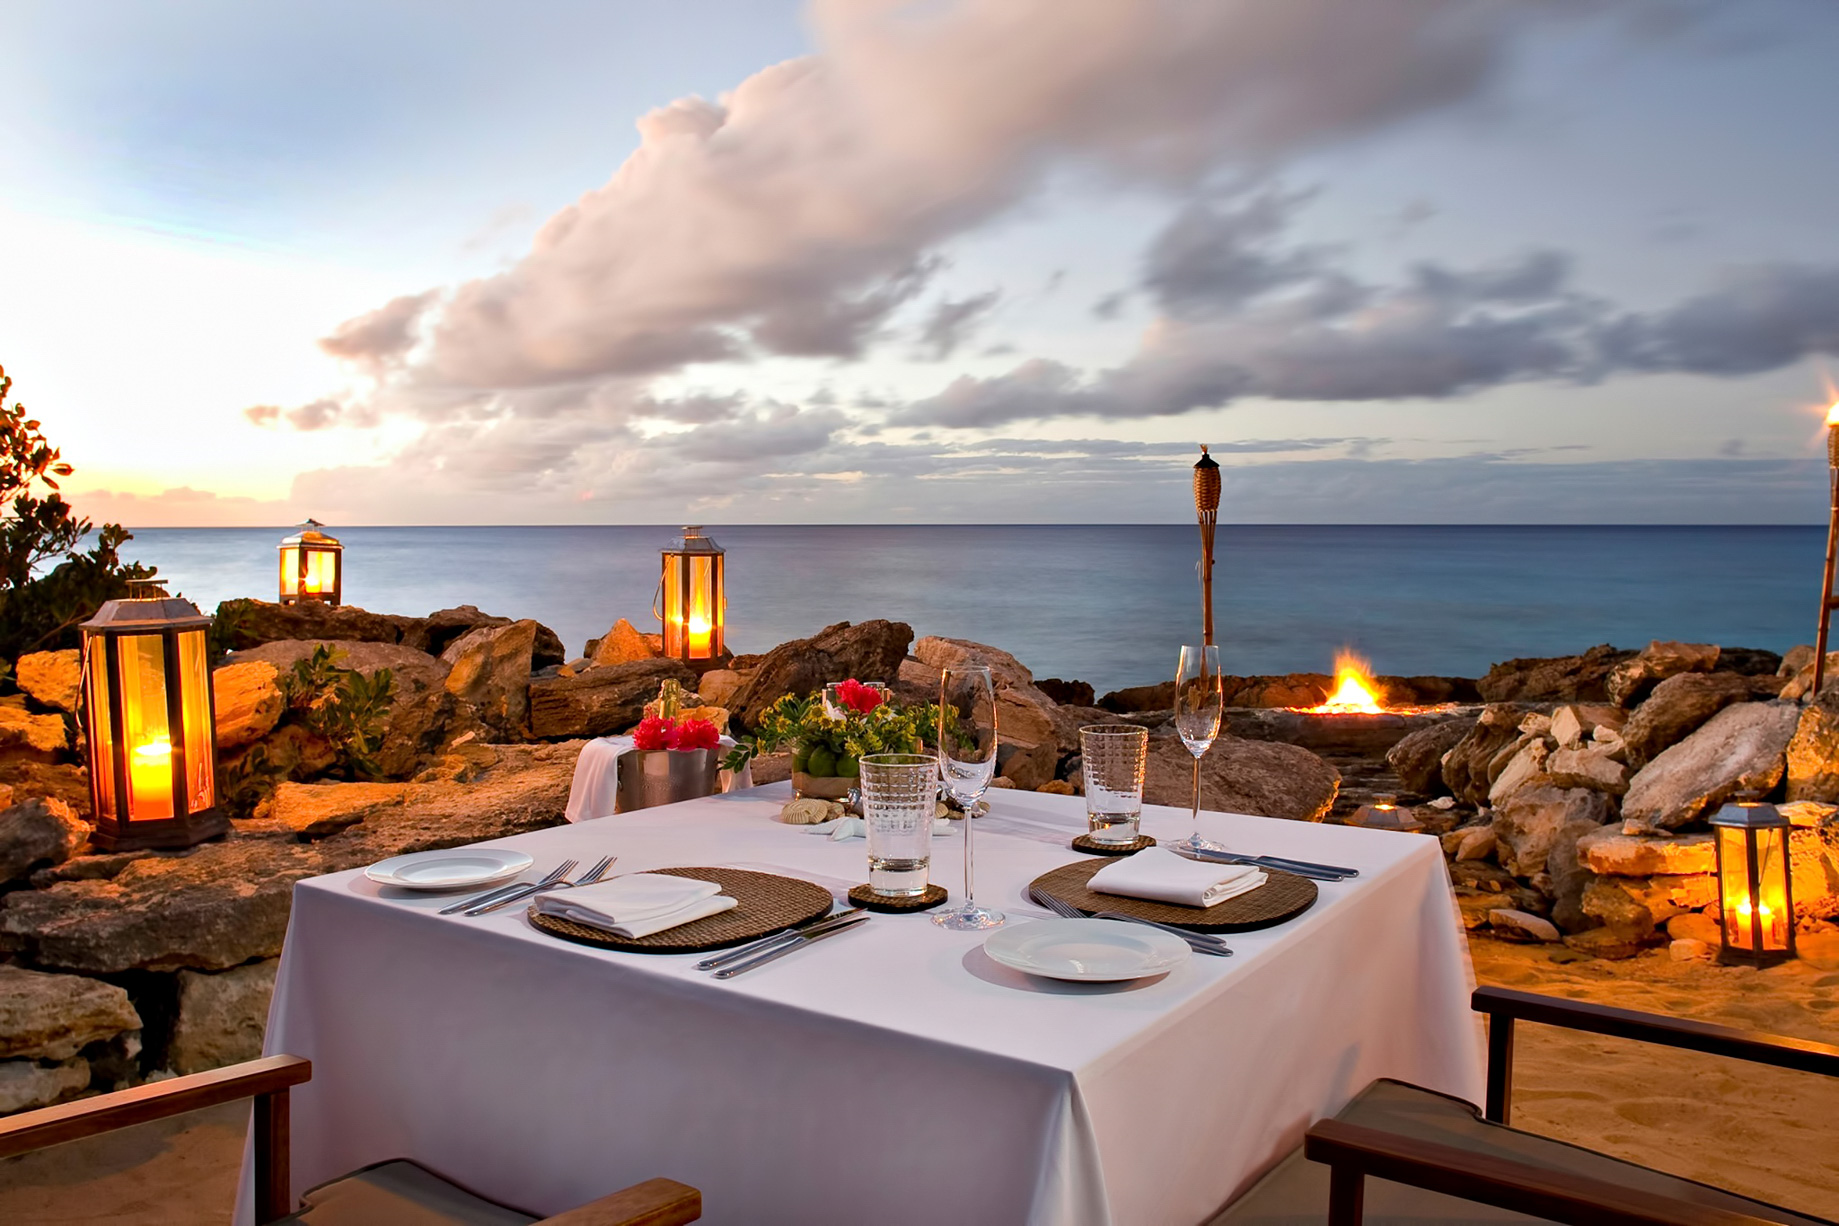 Amanyara Resort – Providenciales, Turks and Caicos Islands – Seaside Dining Twilight